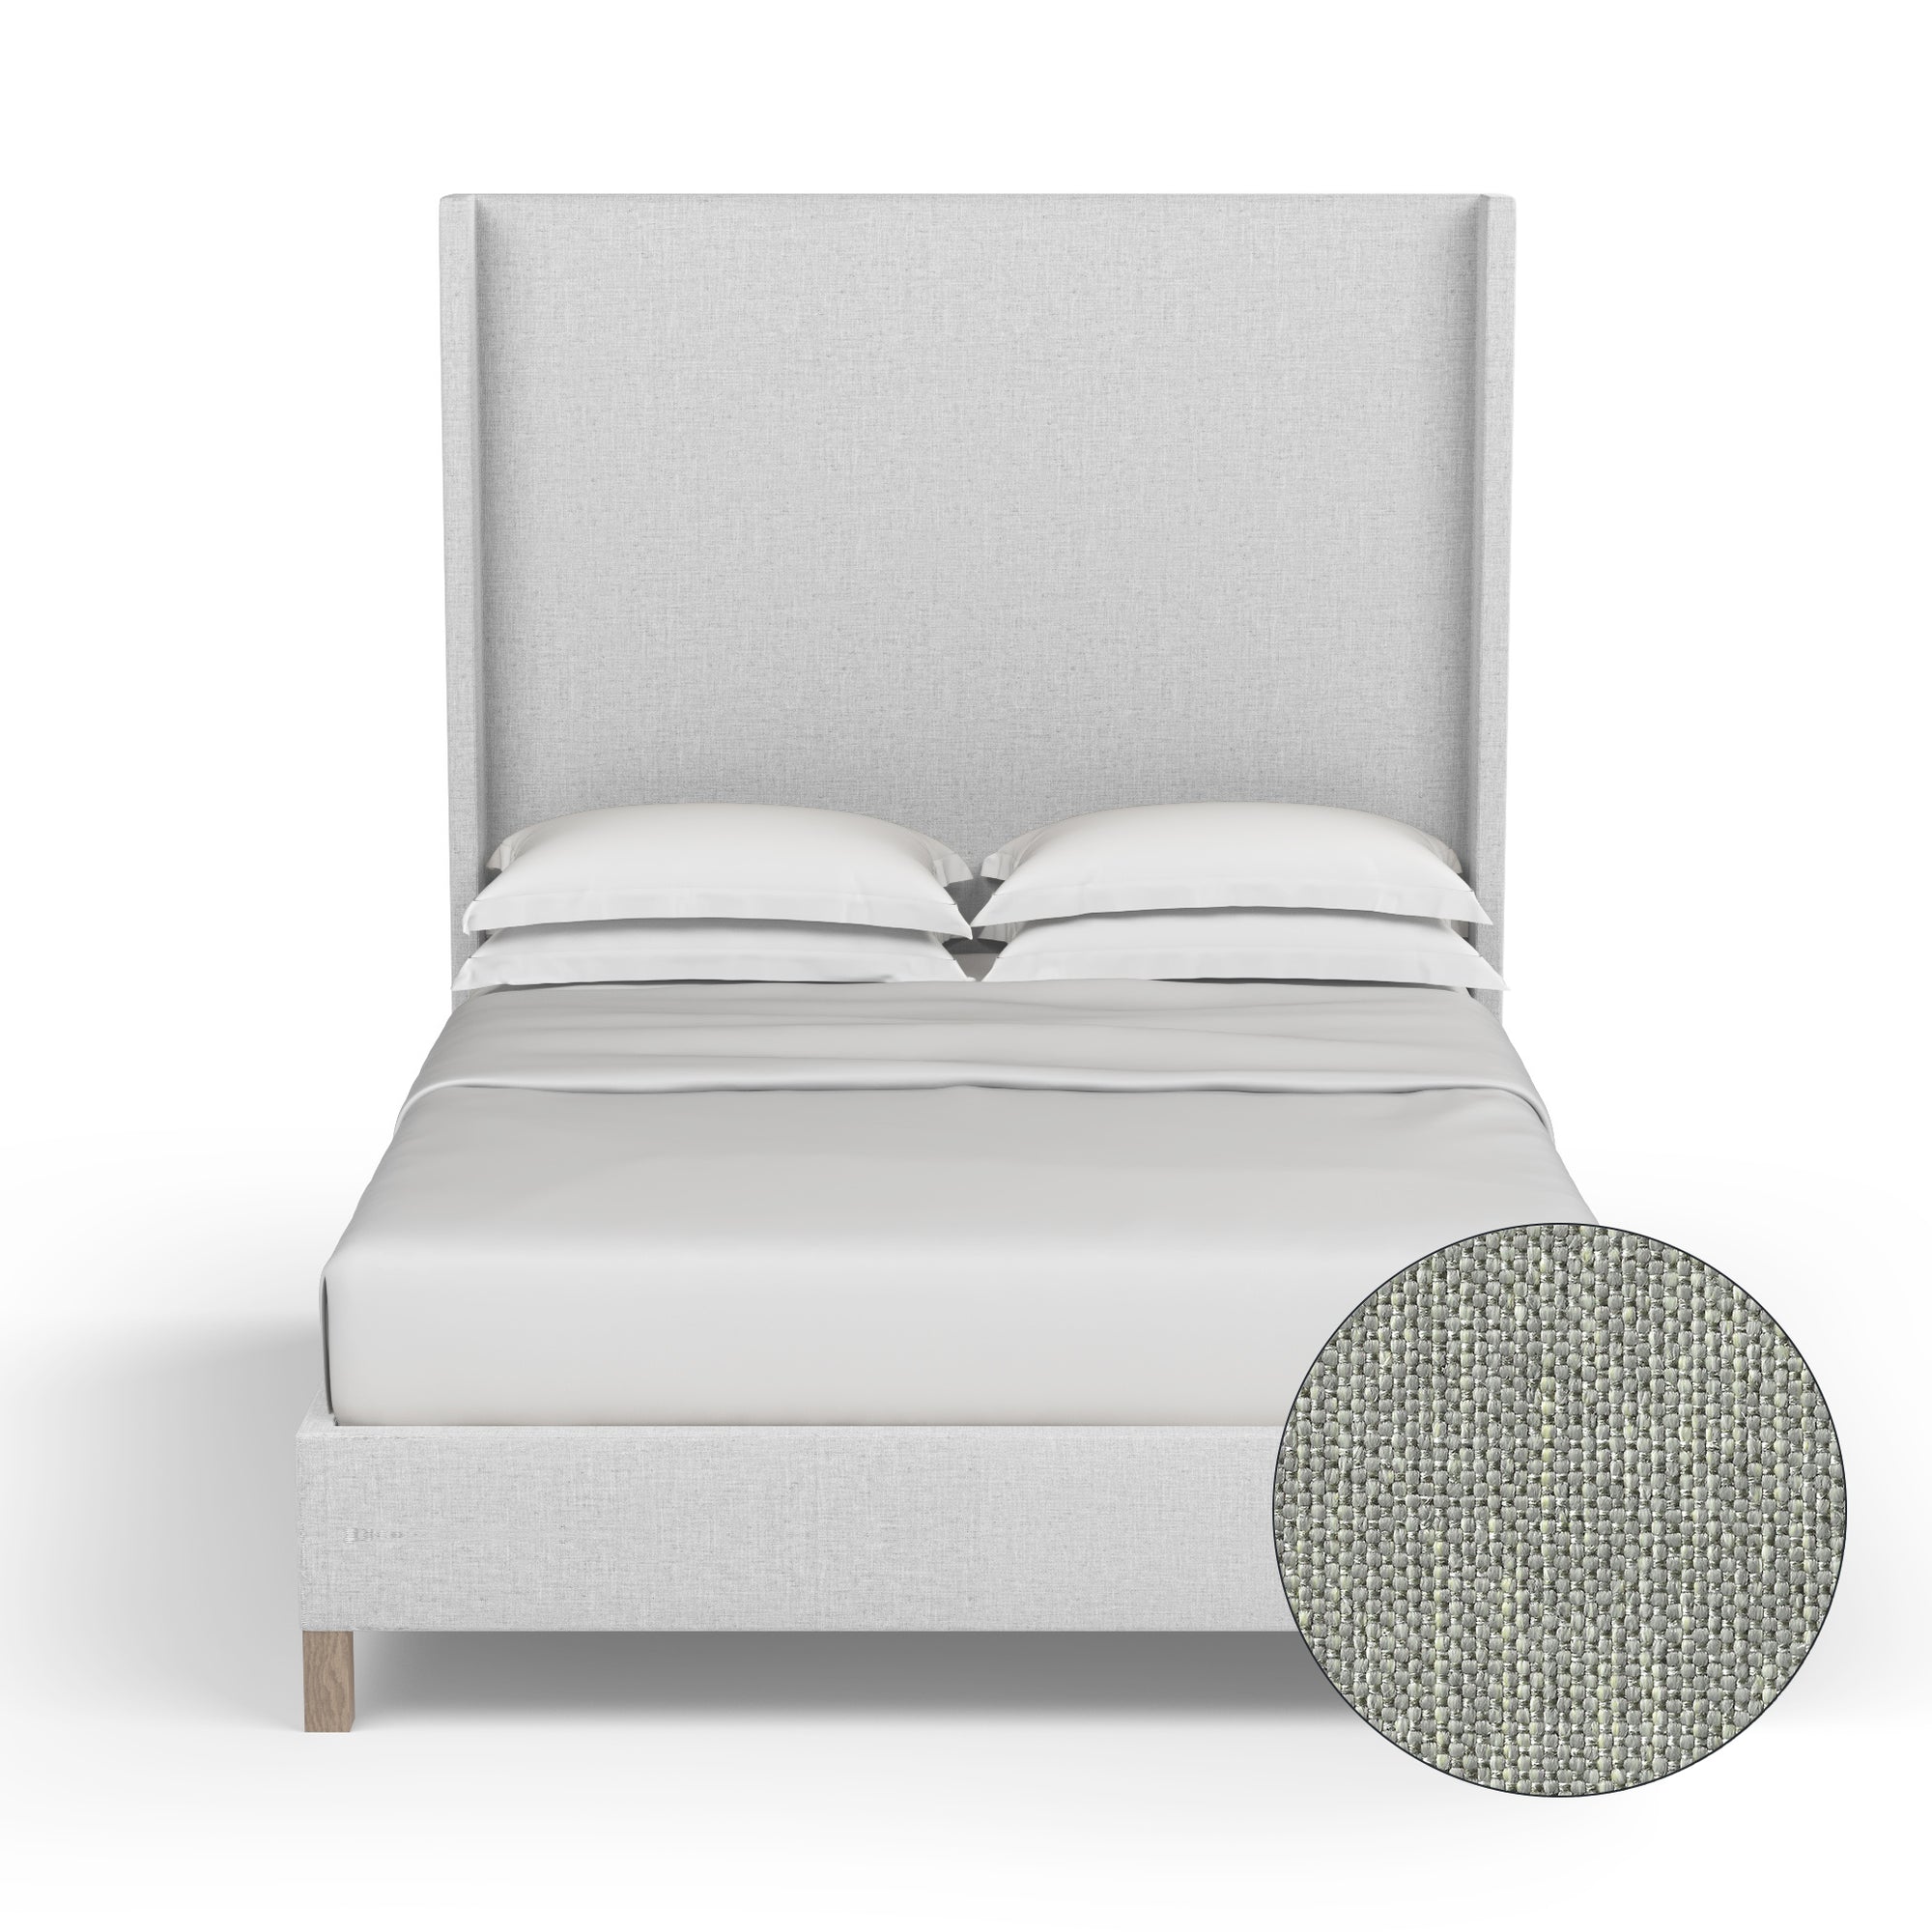 Lincoln Shelter Bed - Haze Pebble Weave Linen